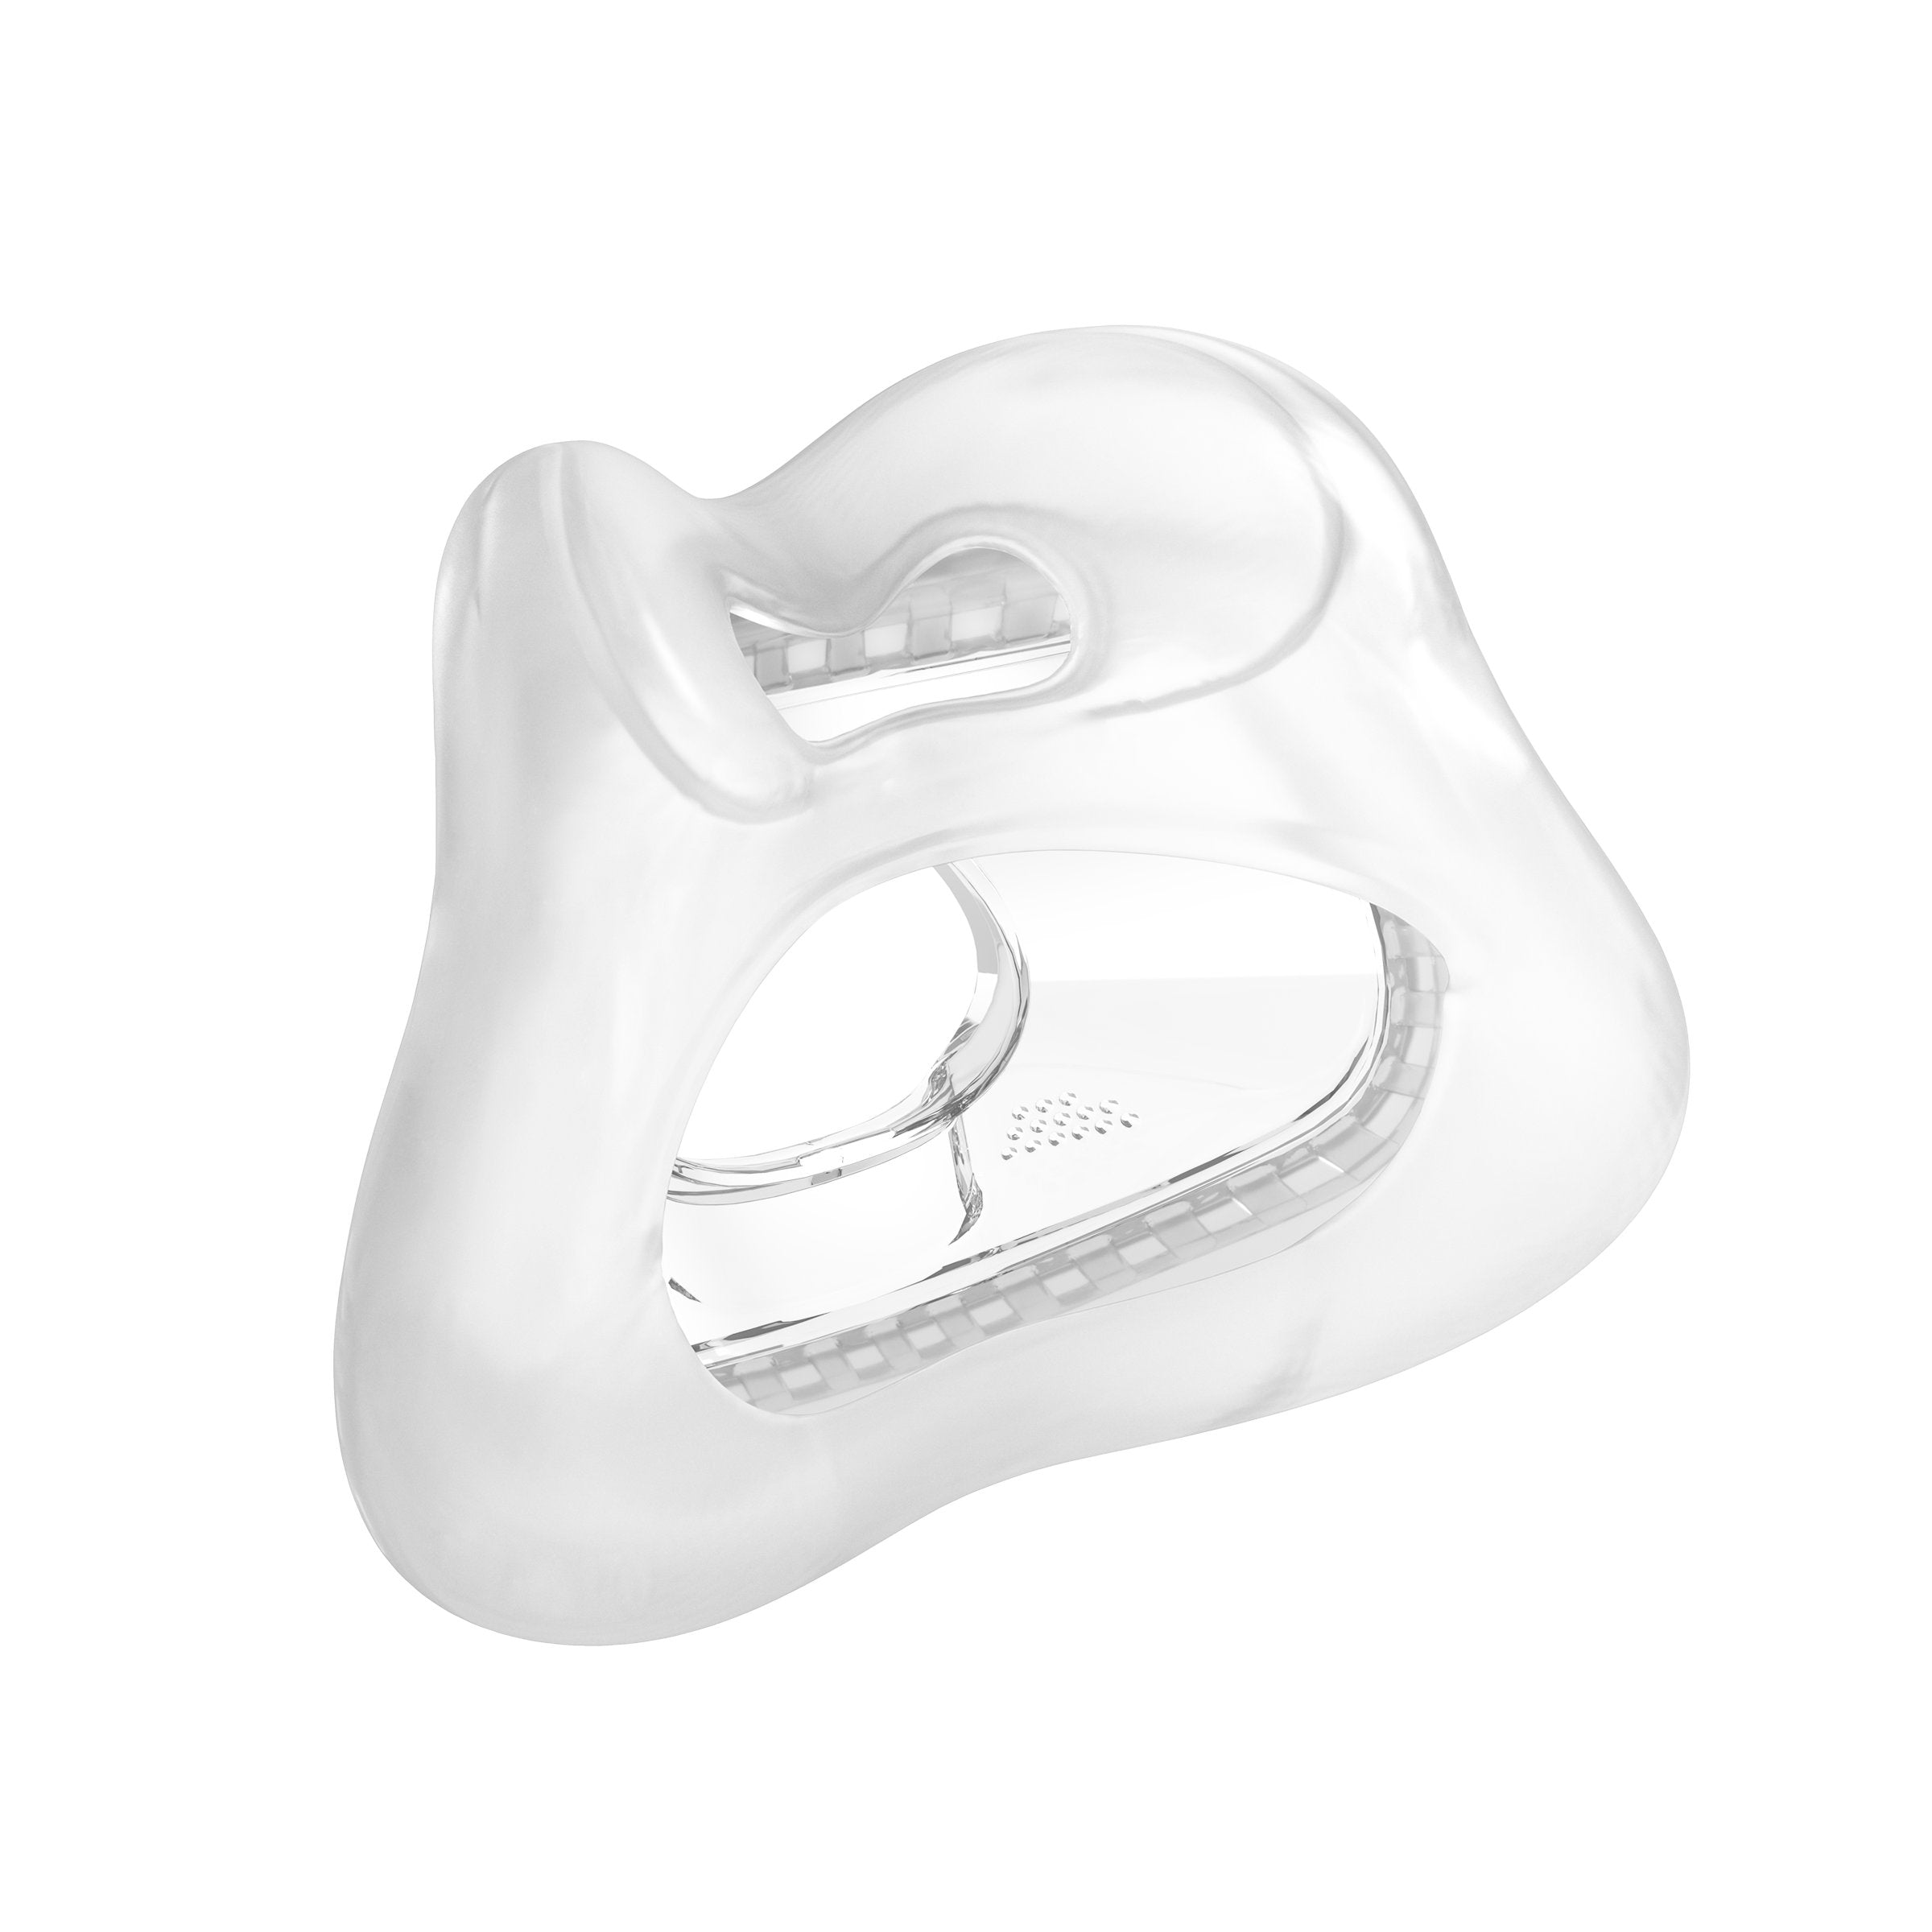 F&P Evora Full CPAP Mask Cushion